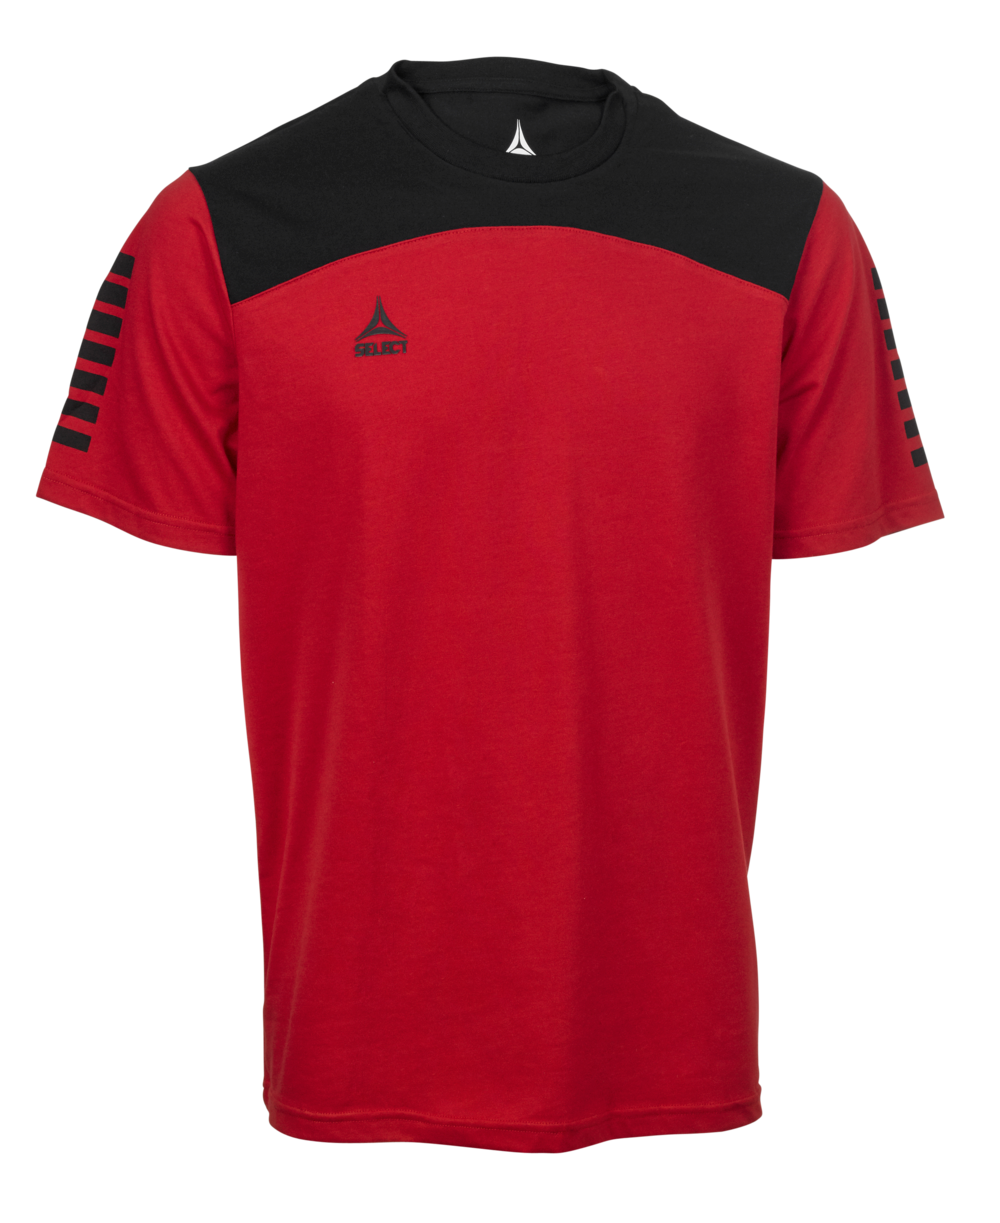 t-shirt_oxford_red-black